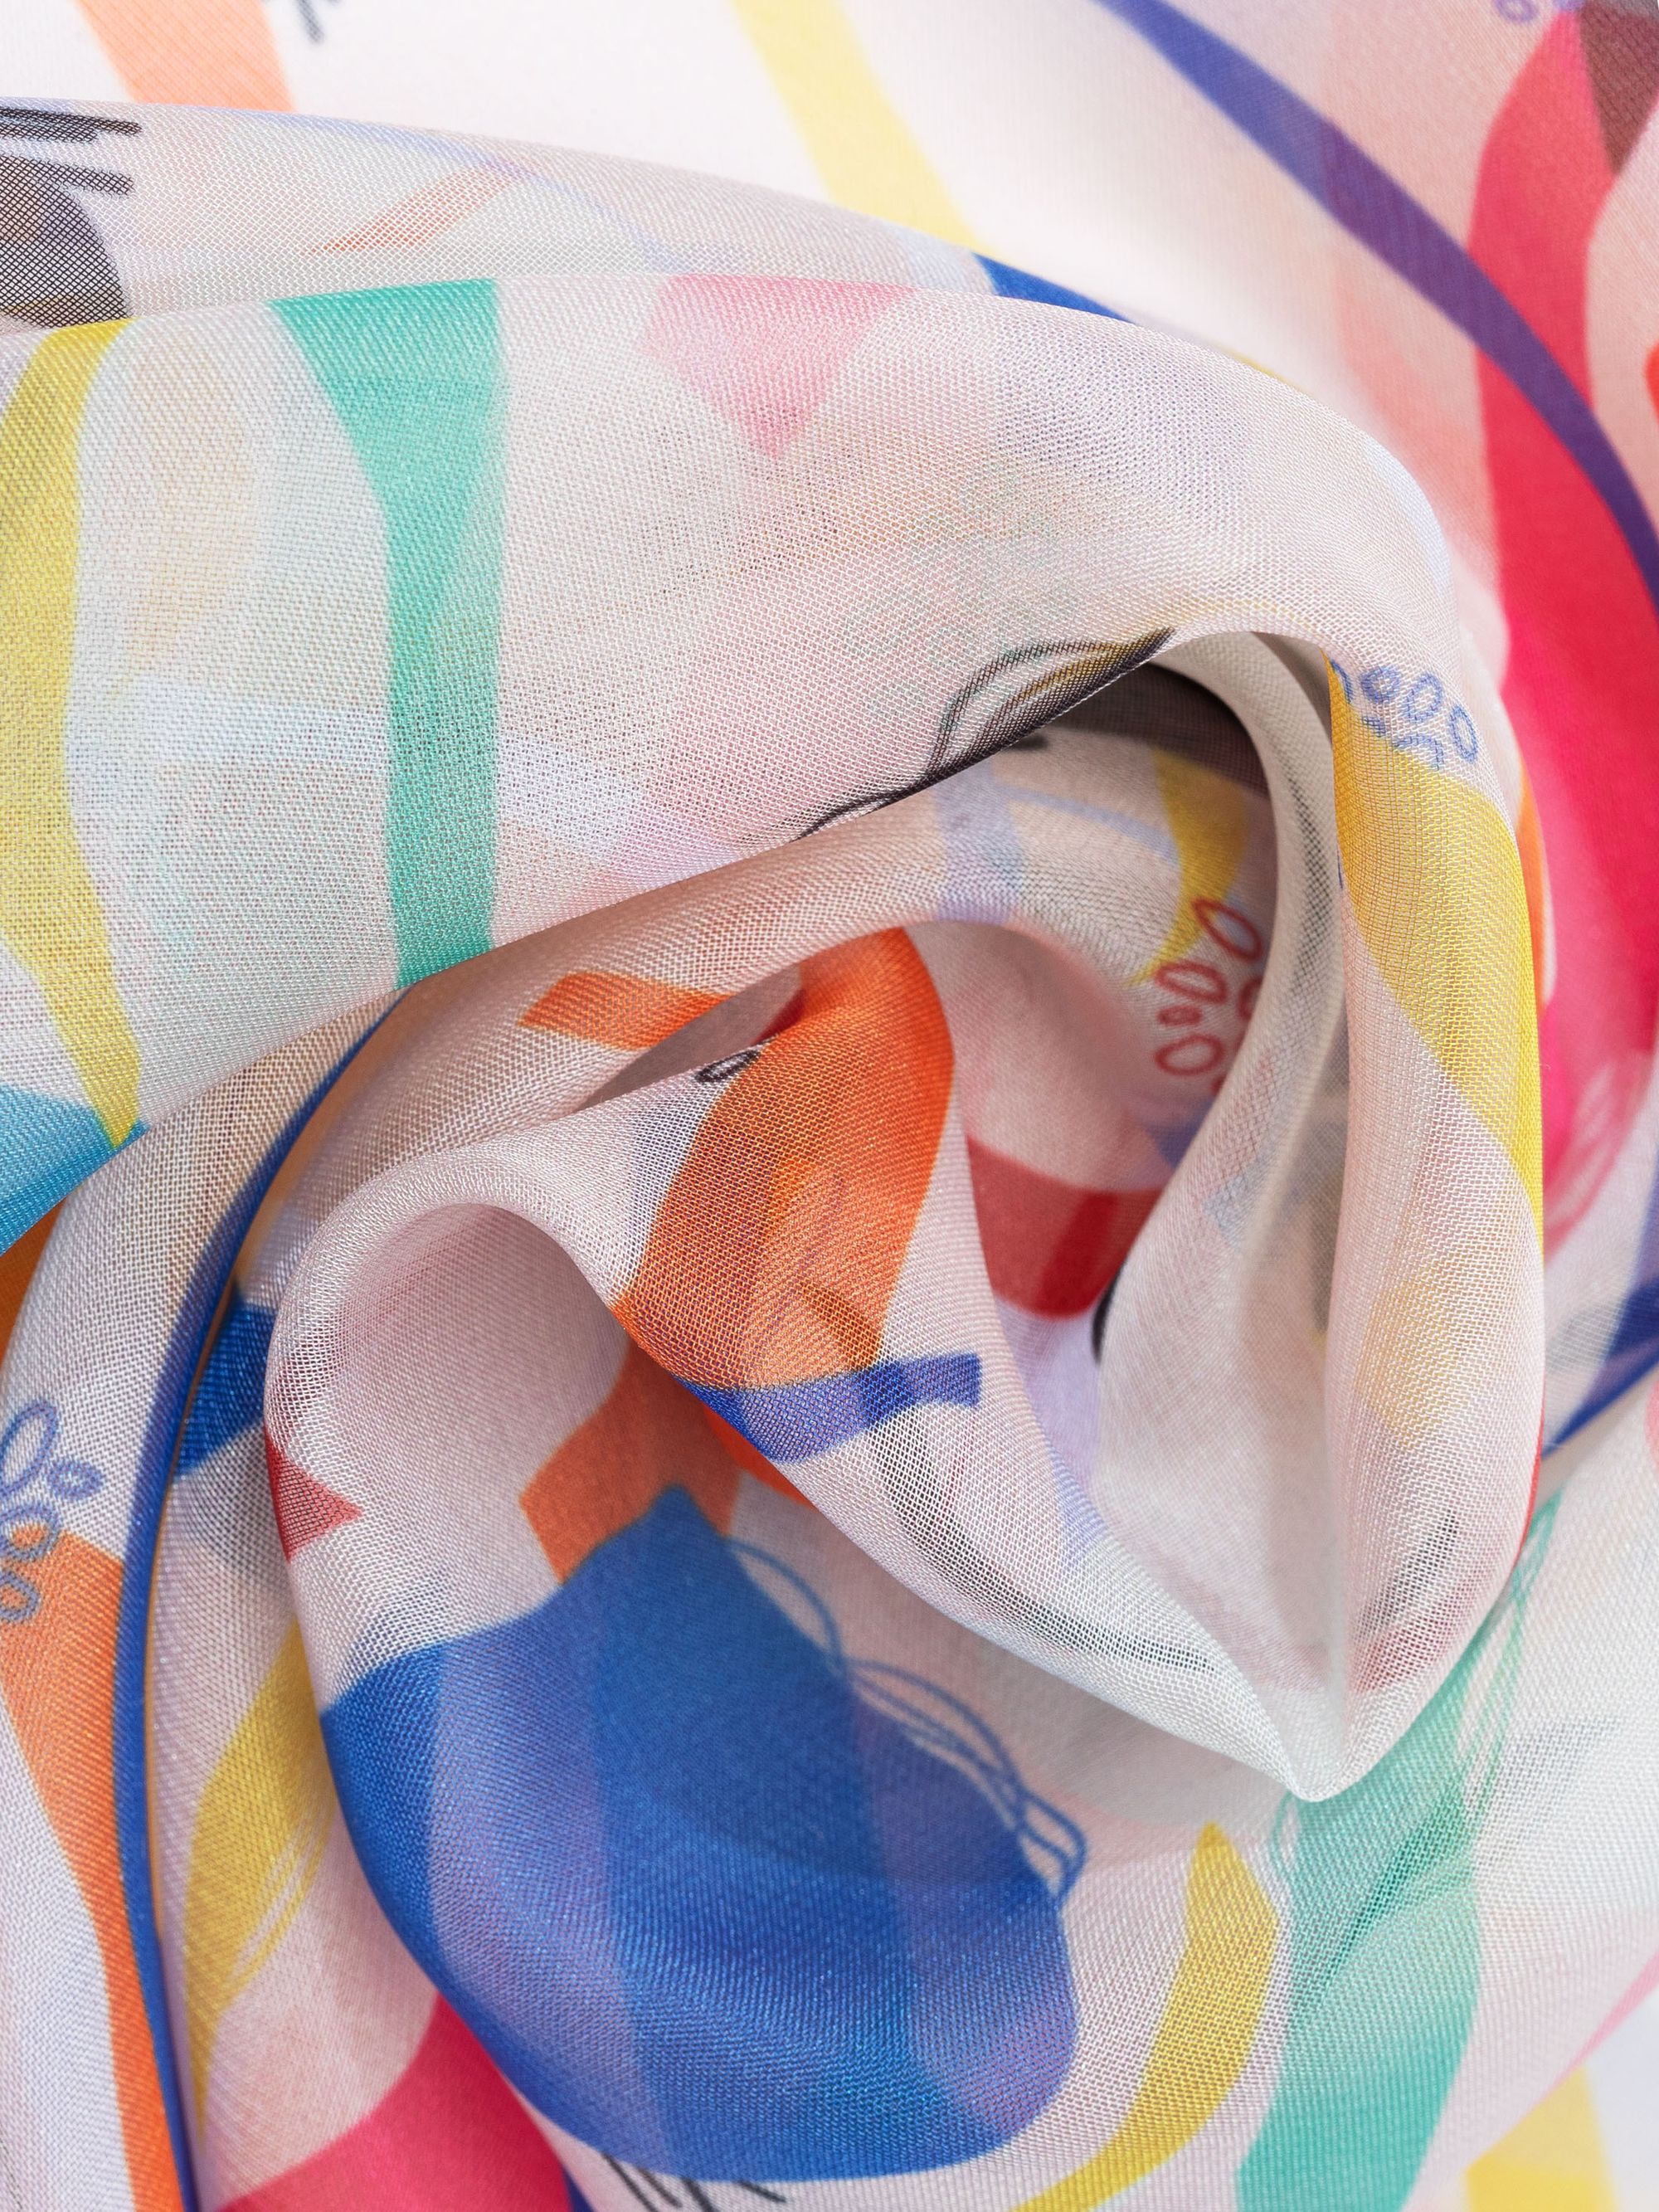 Printed Chiffon Fabric UK. Design Your Own Silk Chiffon Fabric